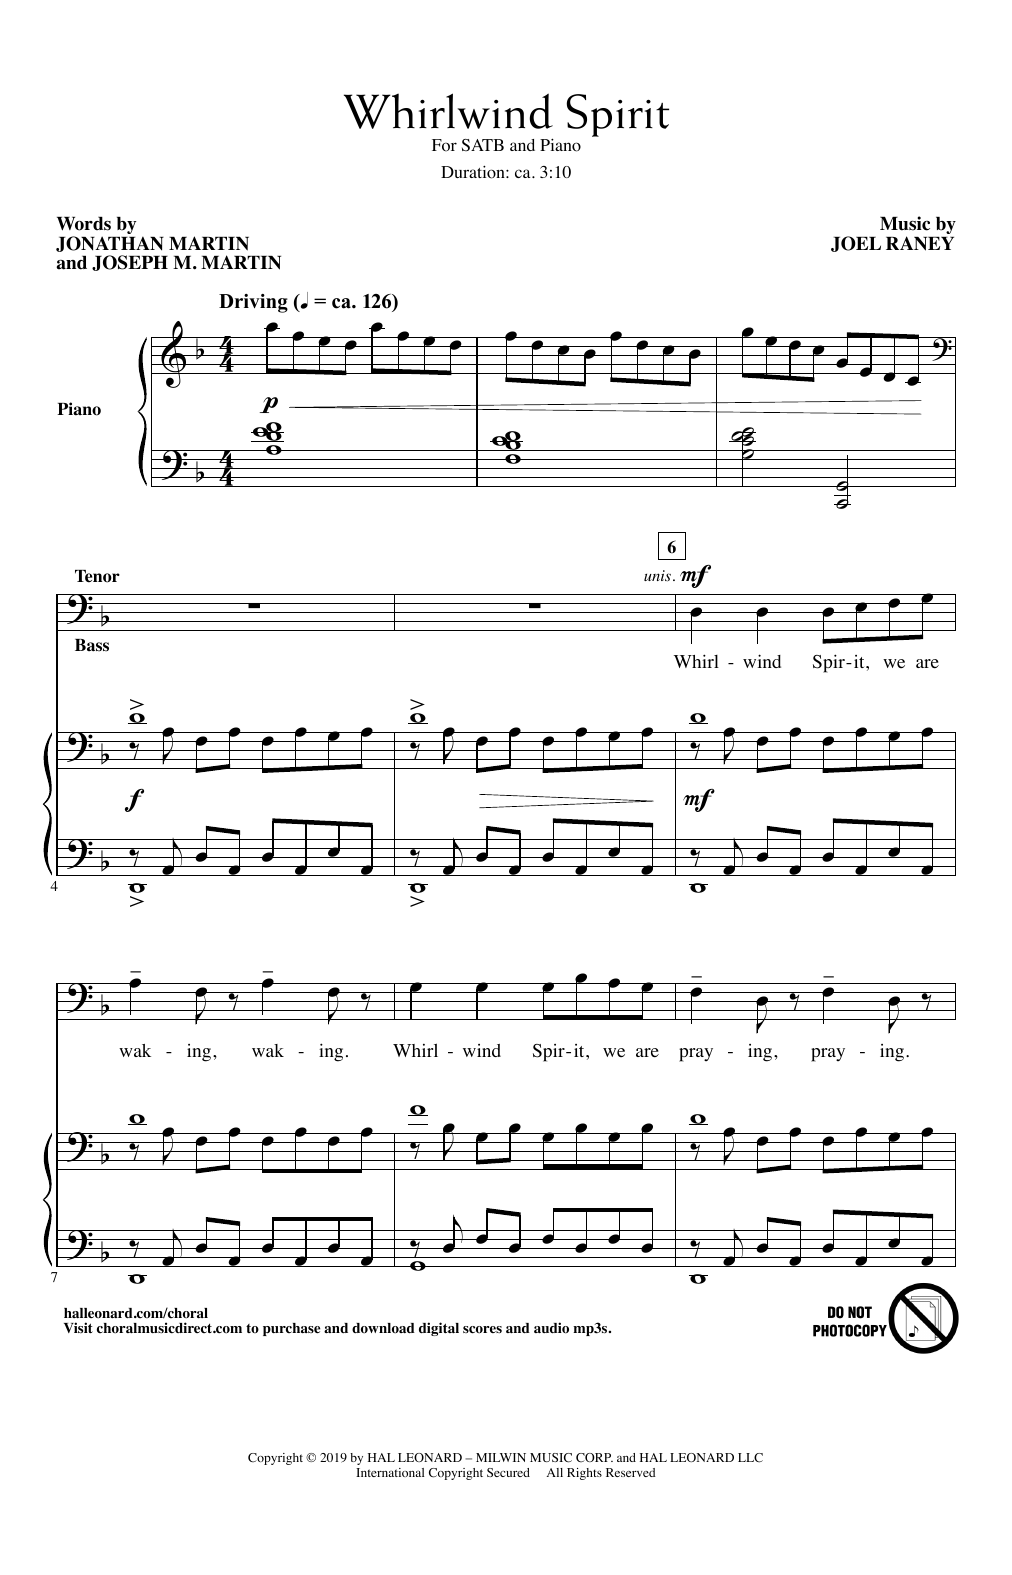 Jonathan Martin, Joseph M. Martin and Joel Raney Whirlwind Spirit Sheet Music Notes & Chords for SATB Choir - Download or Print PDF